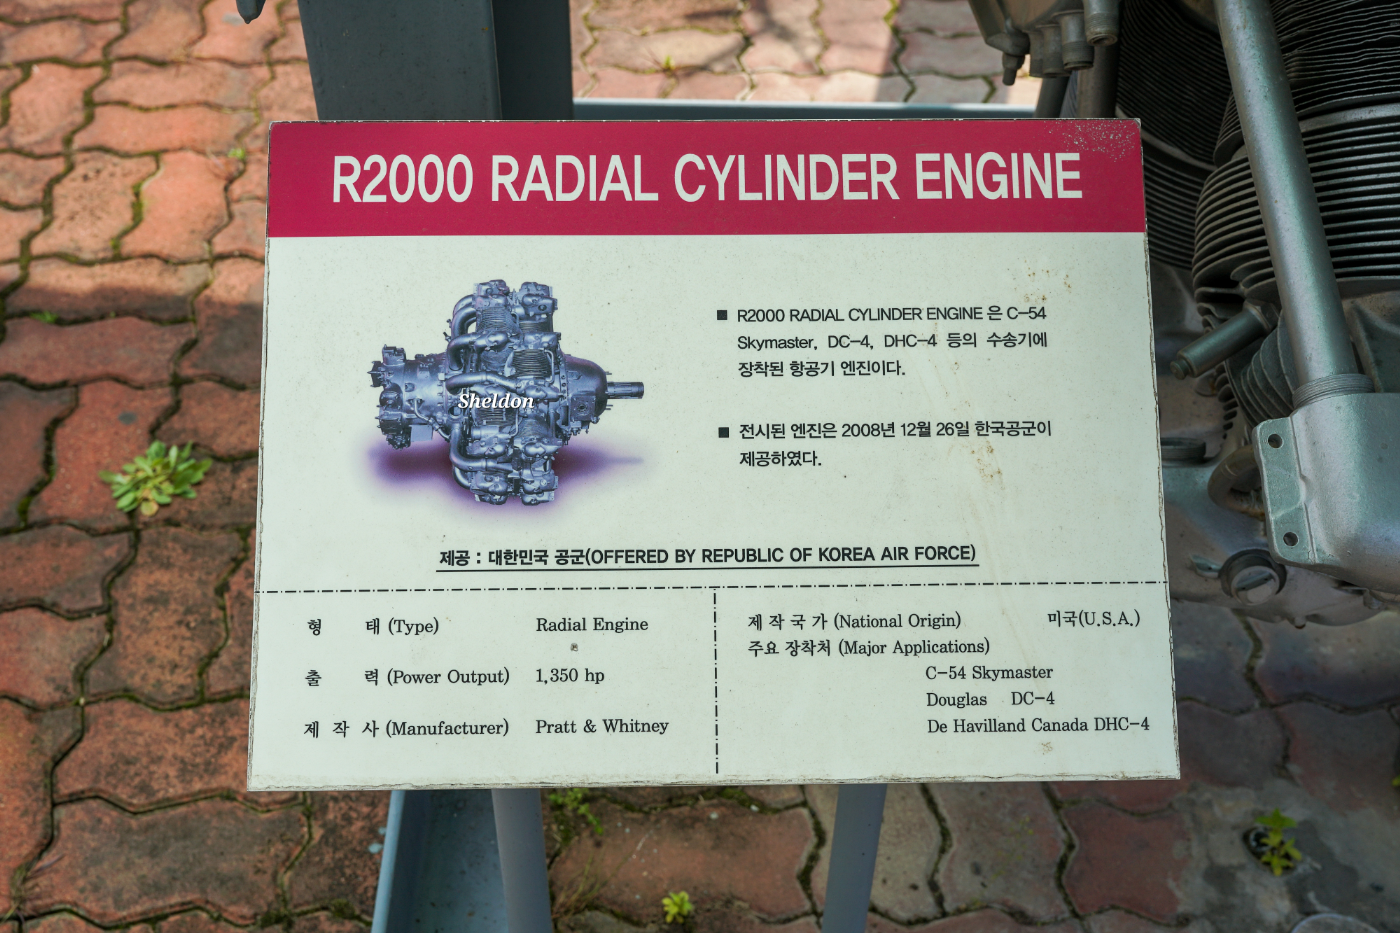 R-2000-9 엔진은 P&W社에서 개발·생산하였으며 출력은 1,350마력이었다. 전시된 엔진은 2008년 12월 26일 한국 공군에서 제공했다고 한다.